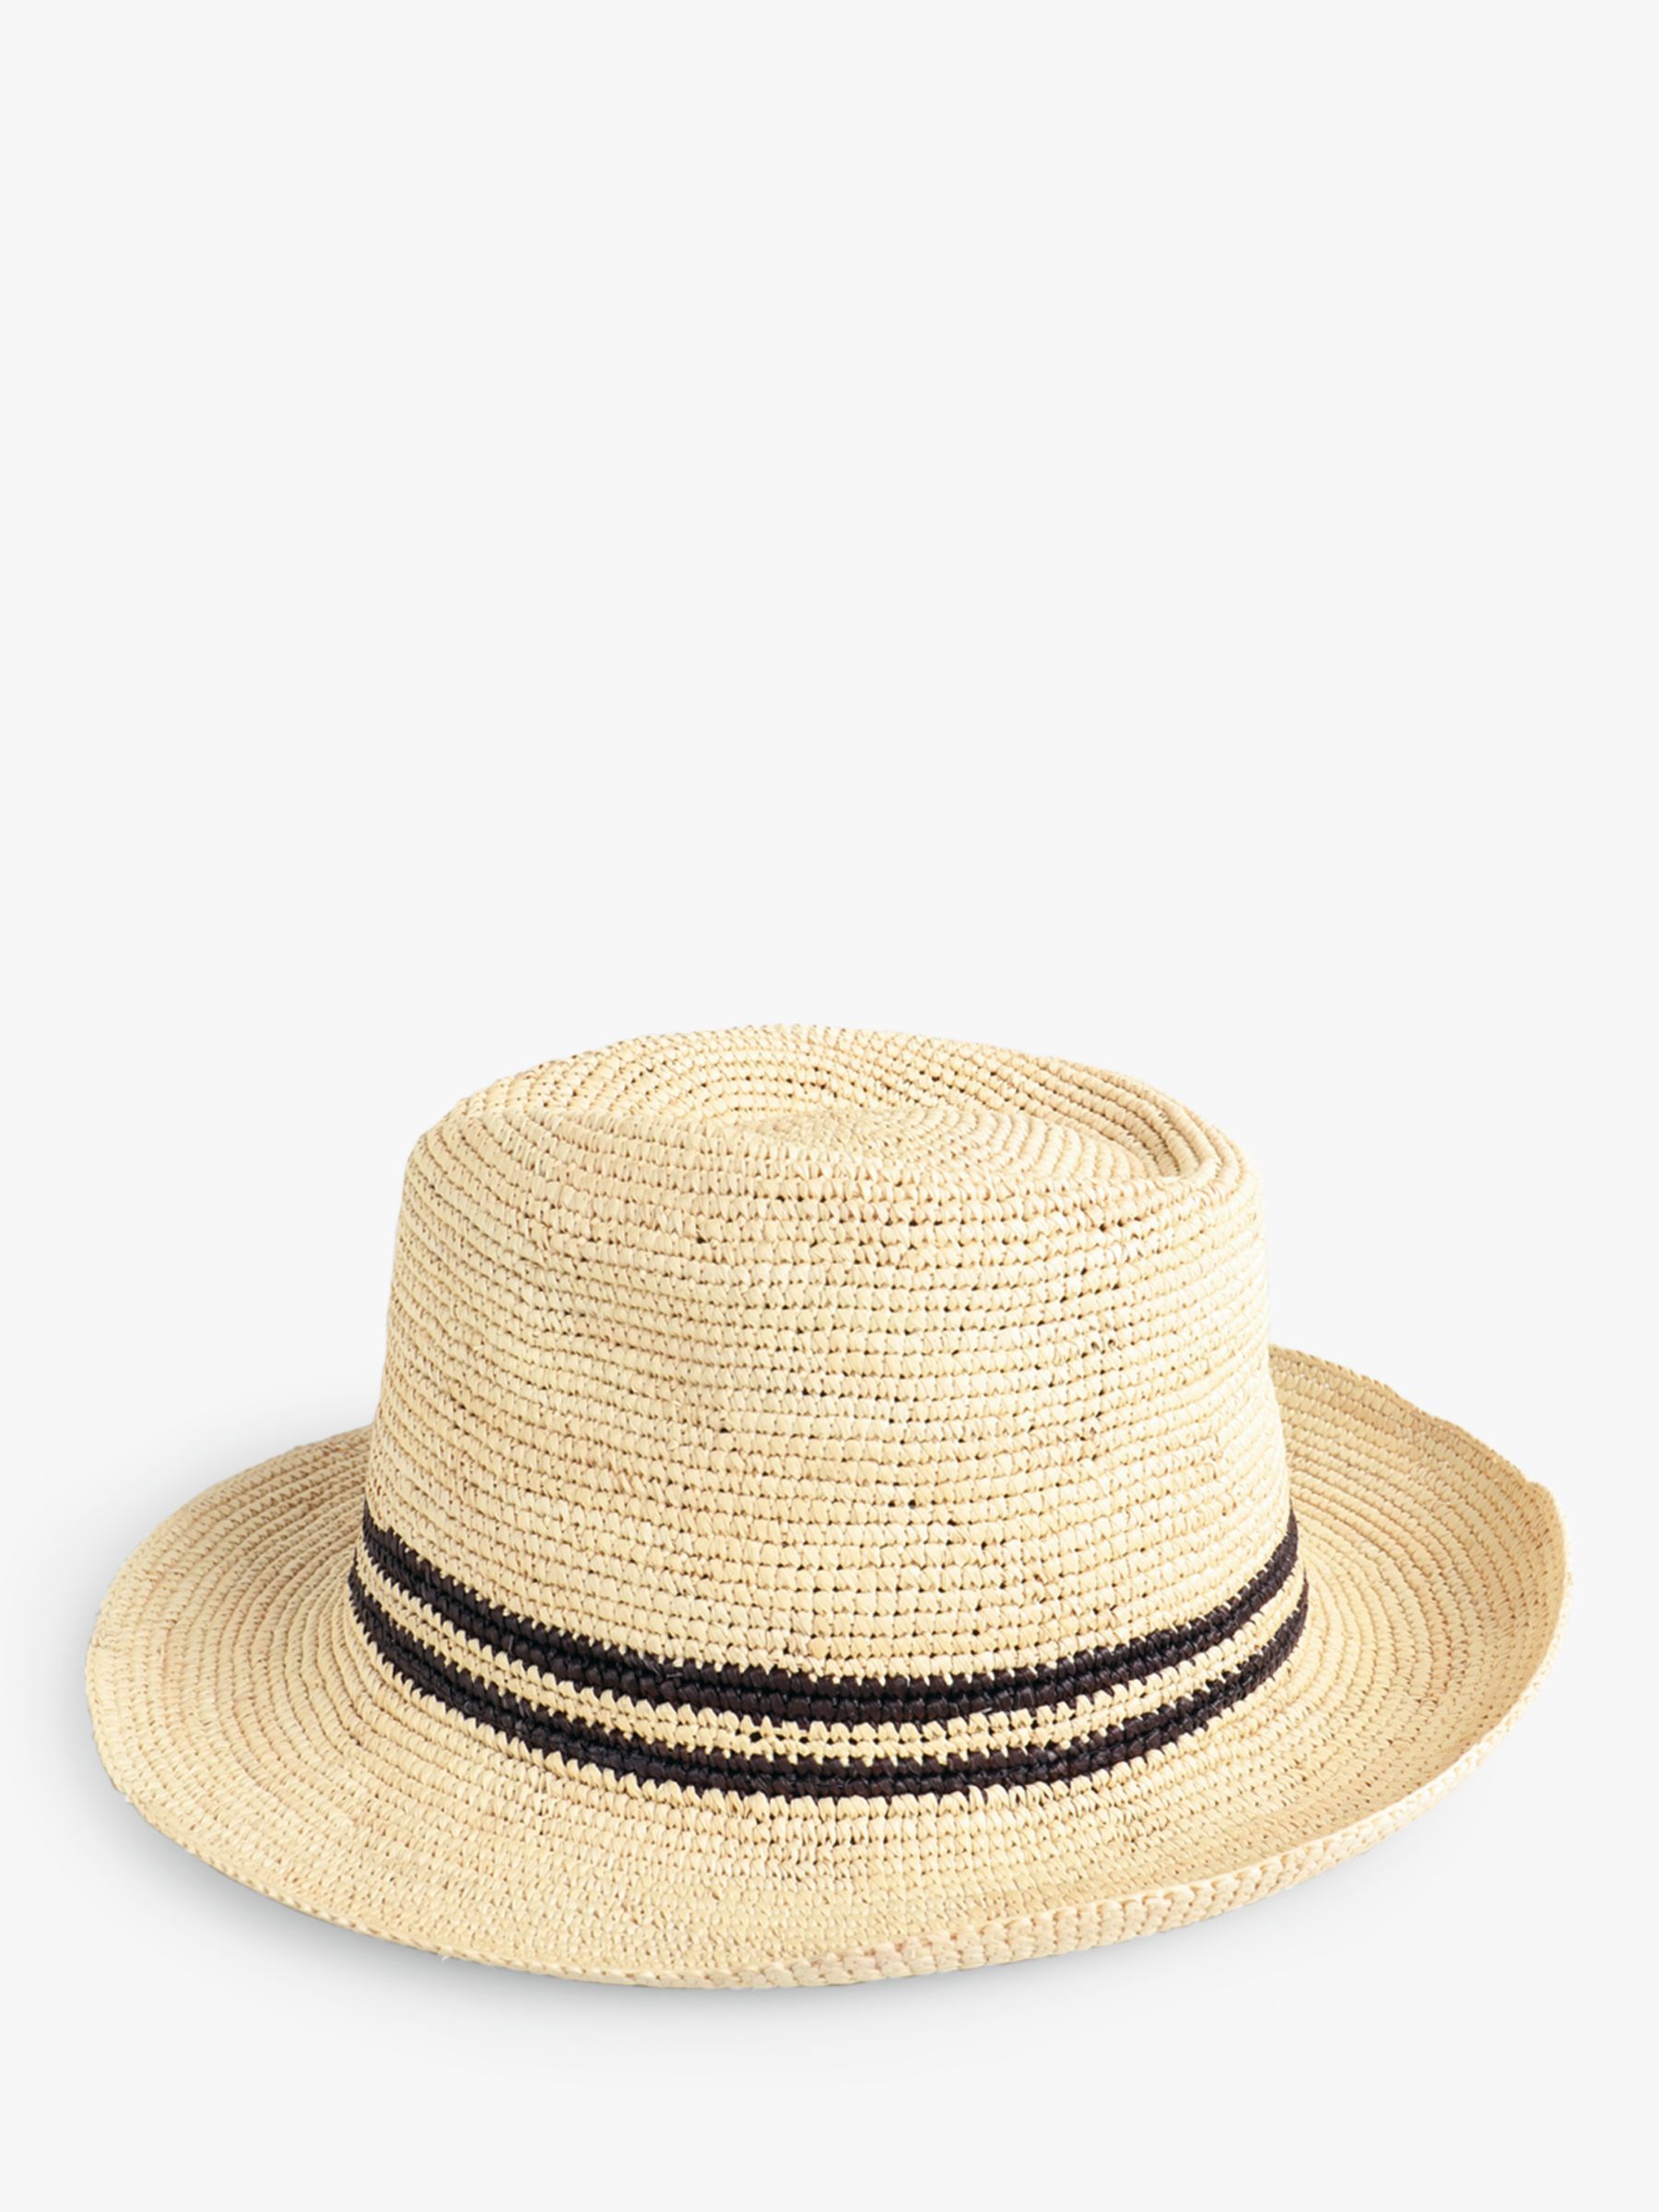 HUSH Crochet Panama Hat, Natural